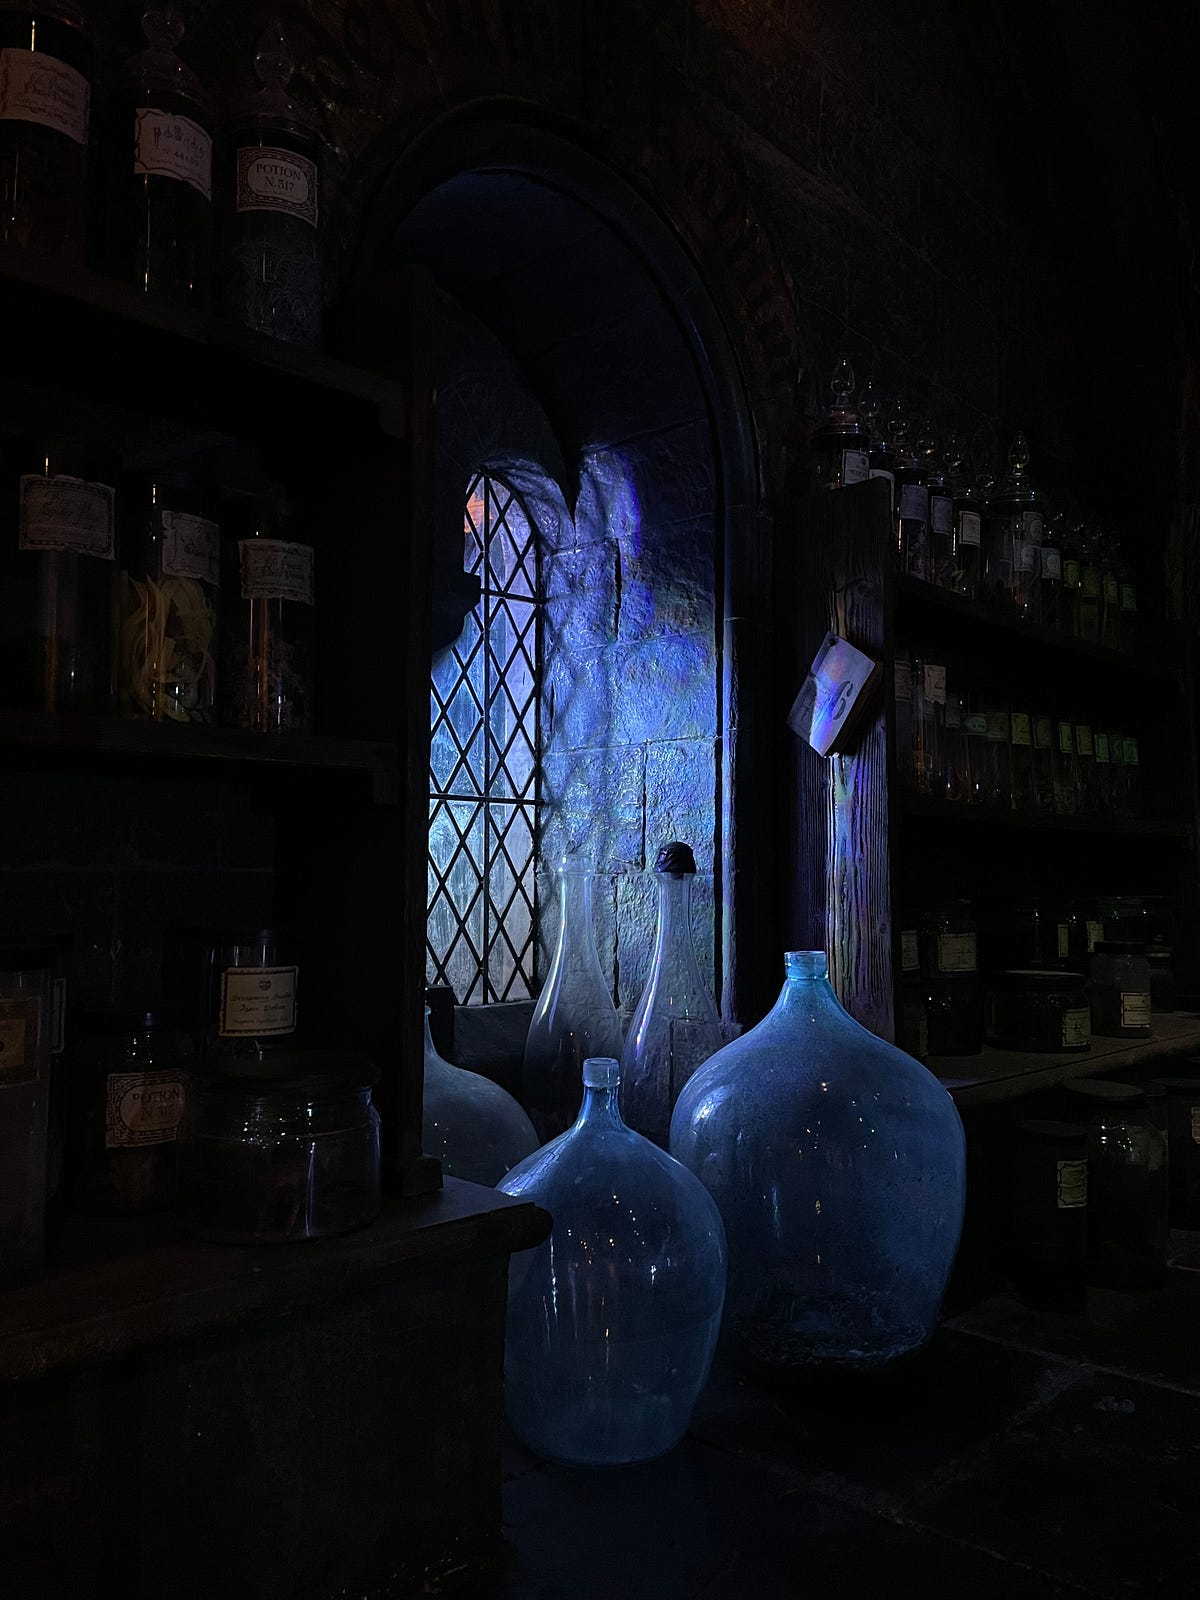 ma potion magique by Jocelyne Ammar